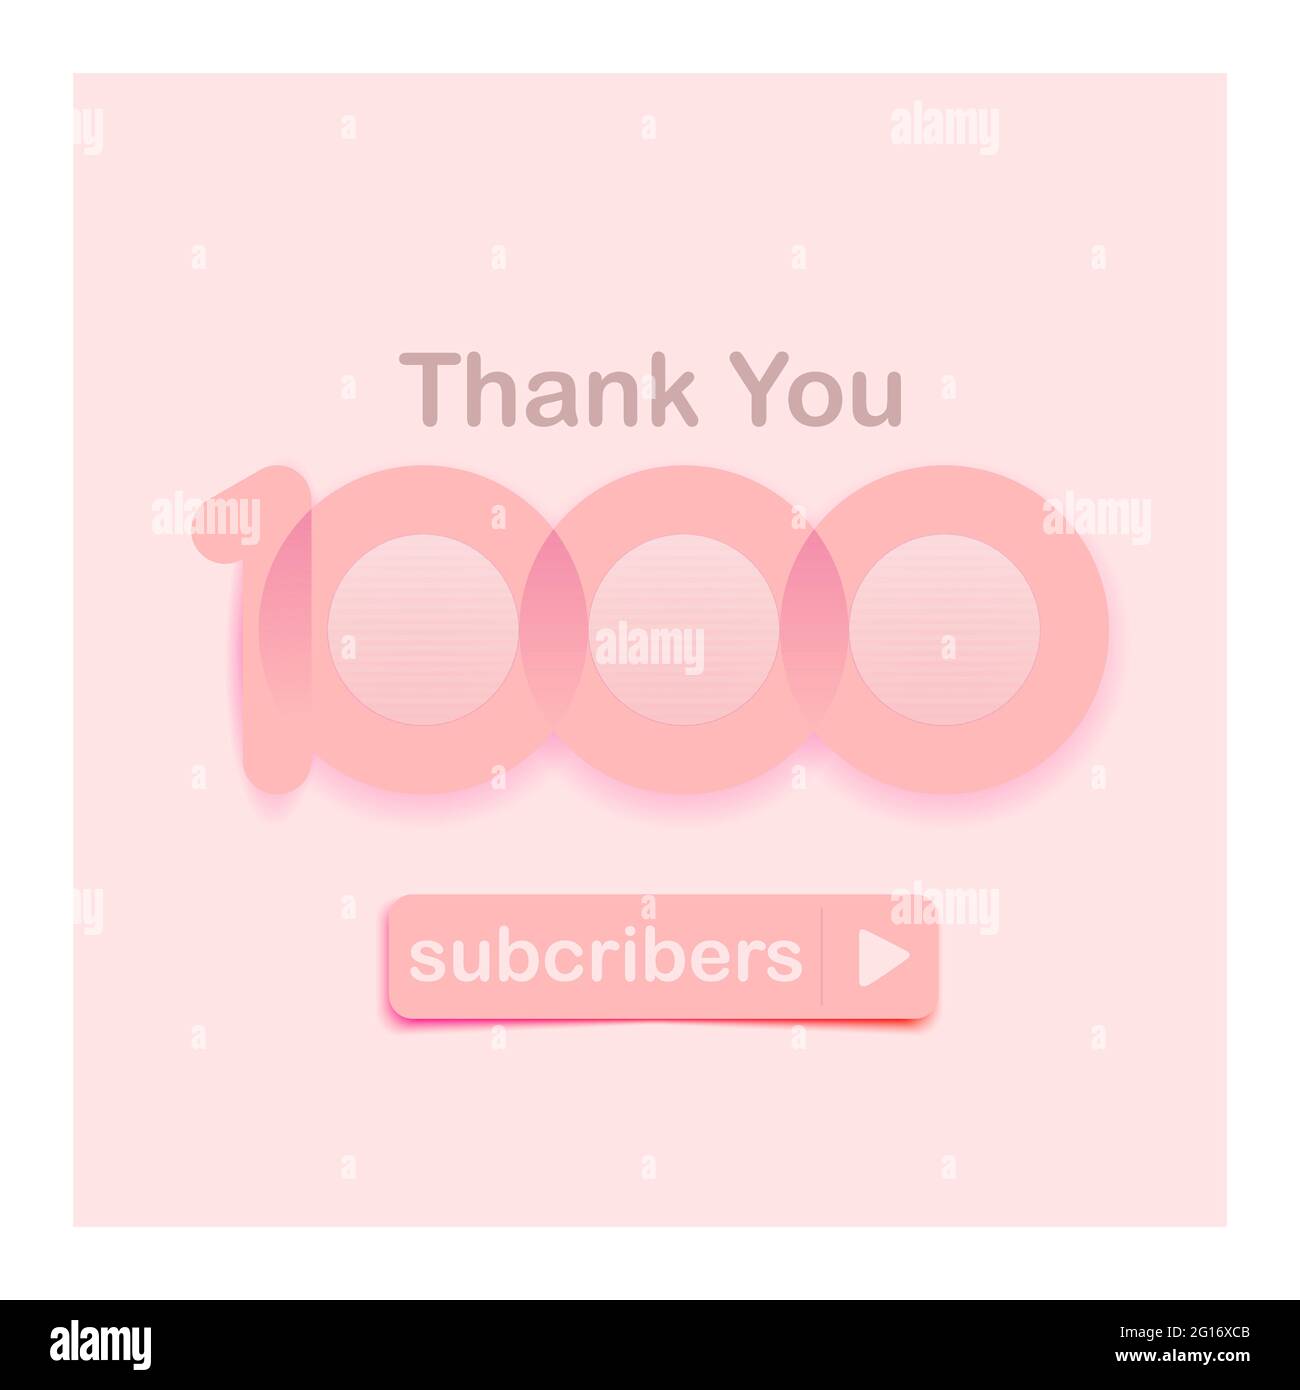 Vielen Dank 1000 Subcribers. Girly niedlich rosa Glückwunschkarte für soziale Netzwerk. Vektorgrafik Stock Vektor